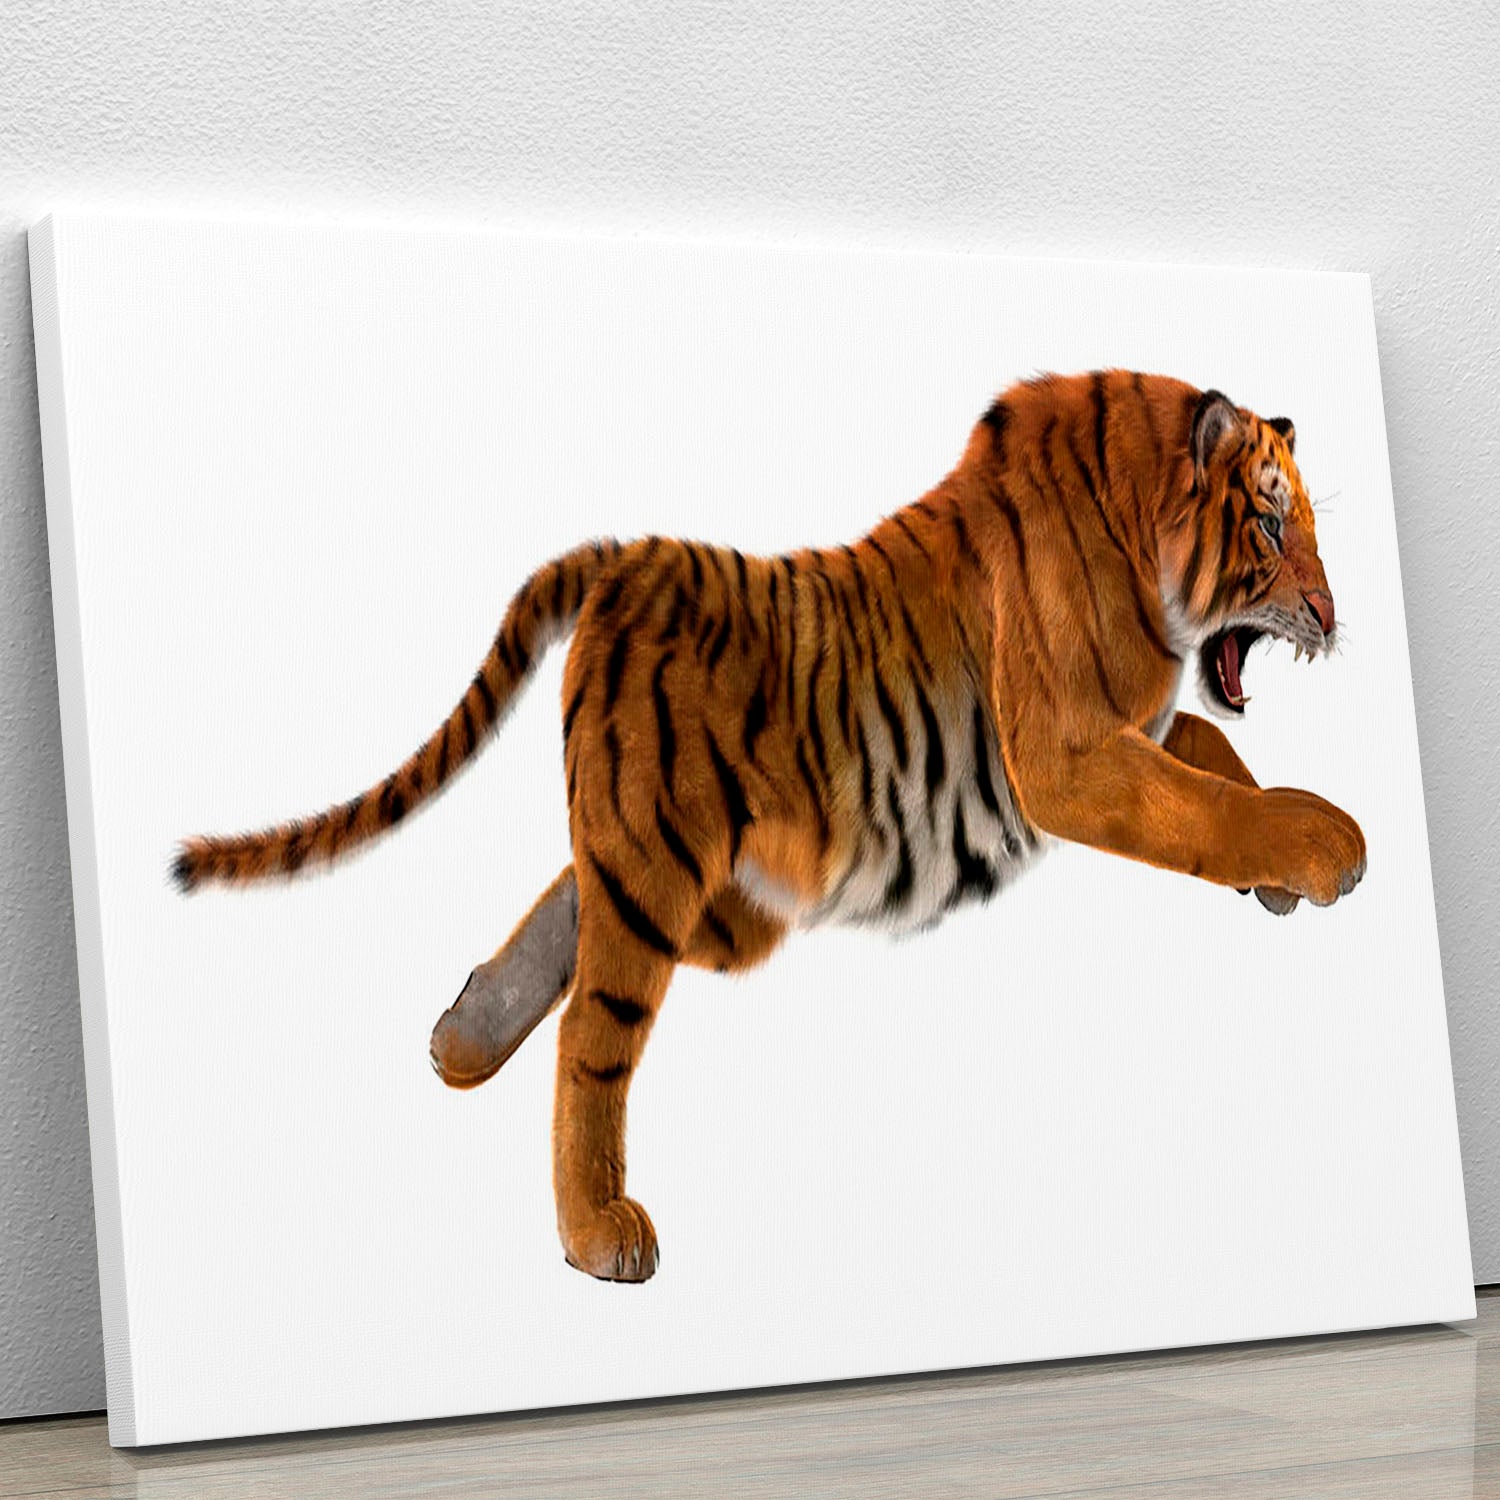 3D digital render of a hunting big cat Canvas Print or Poster - Canvas Art Rocks - 1